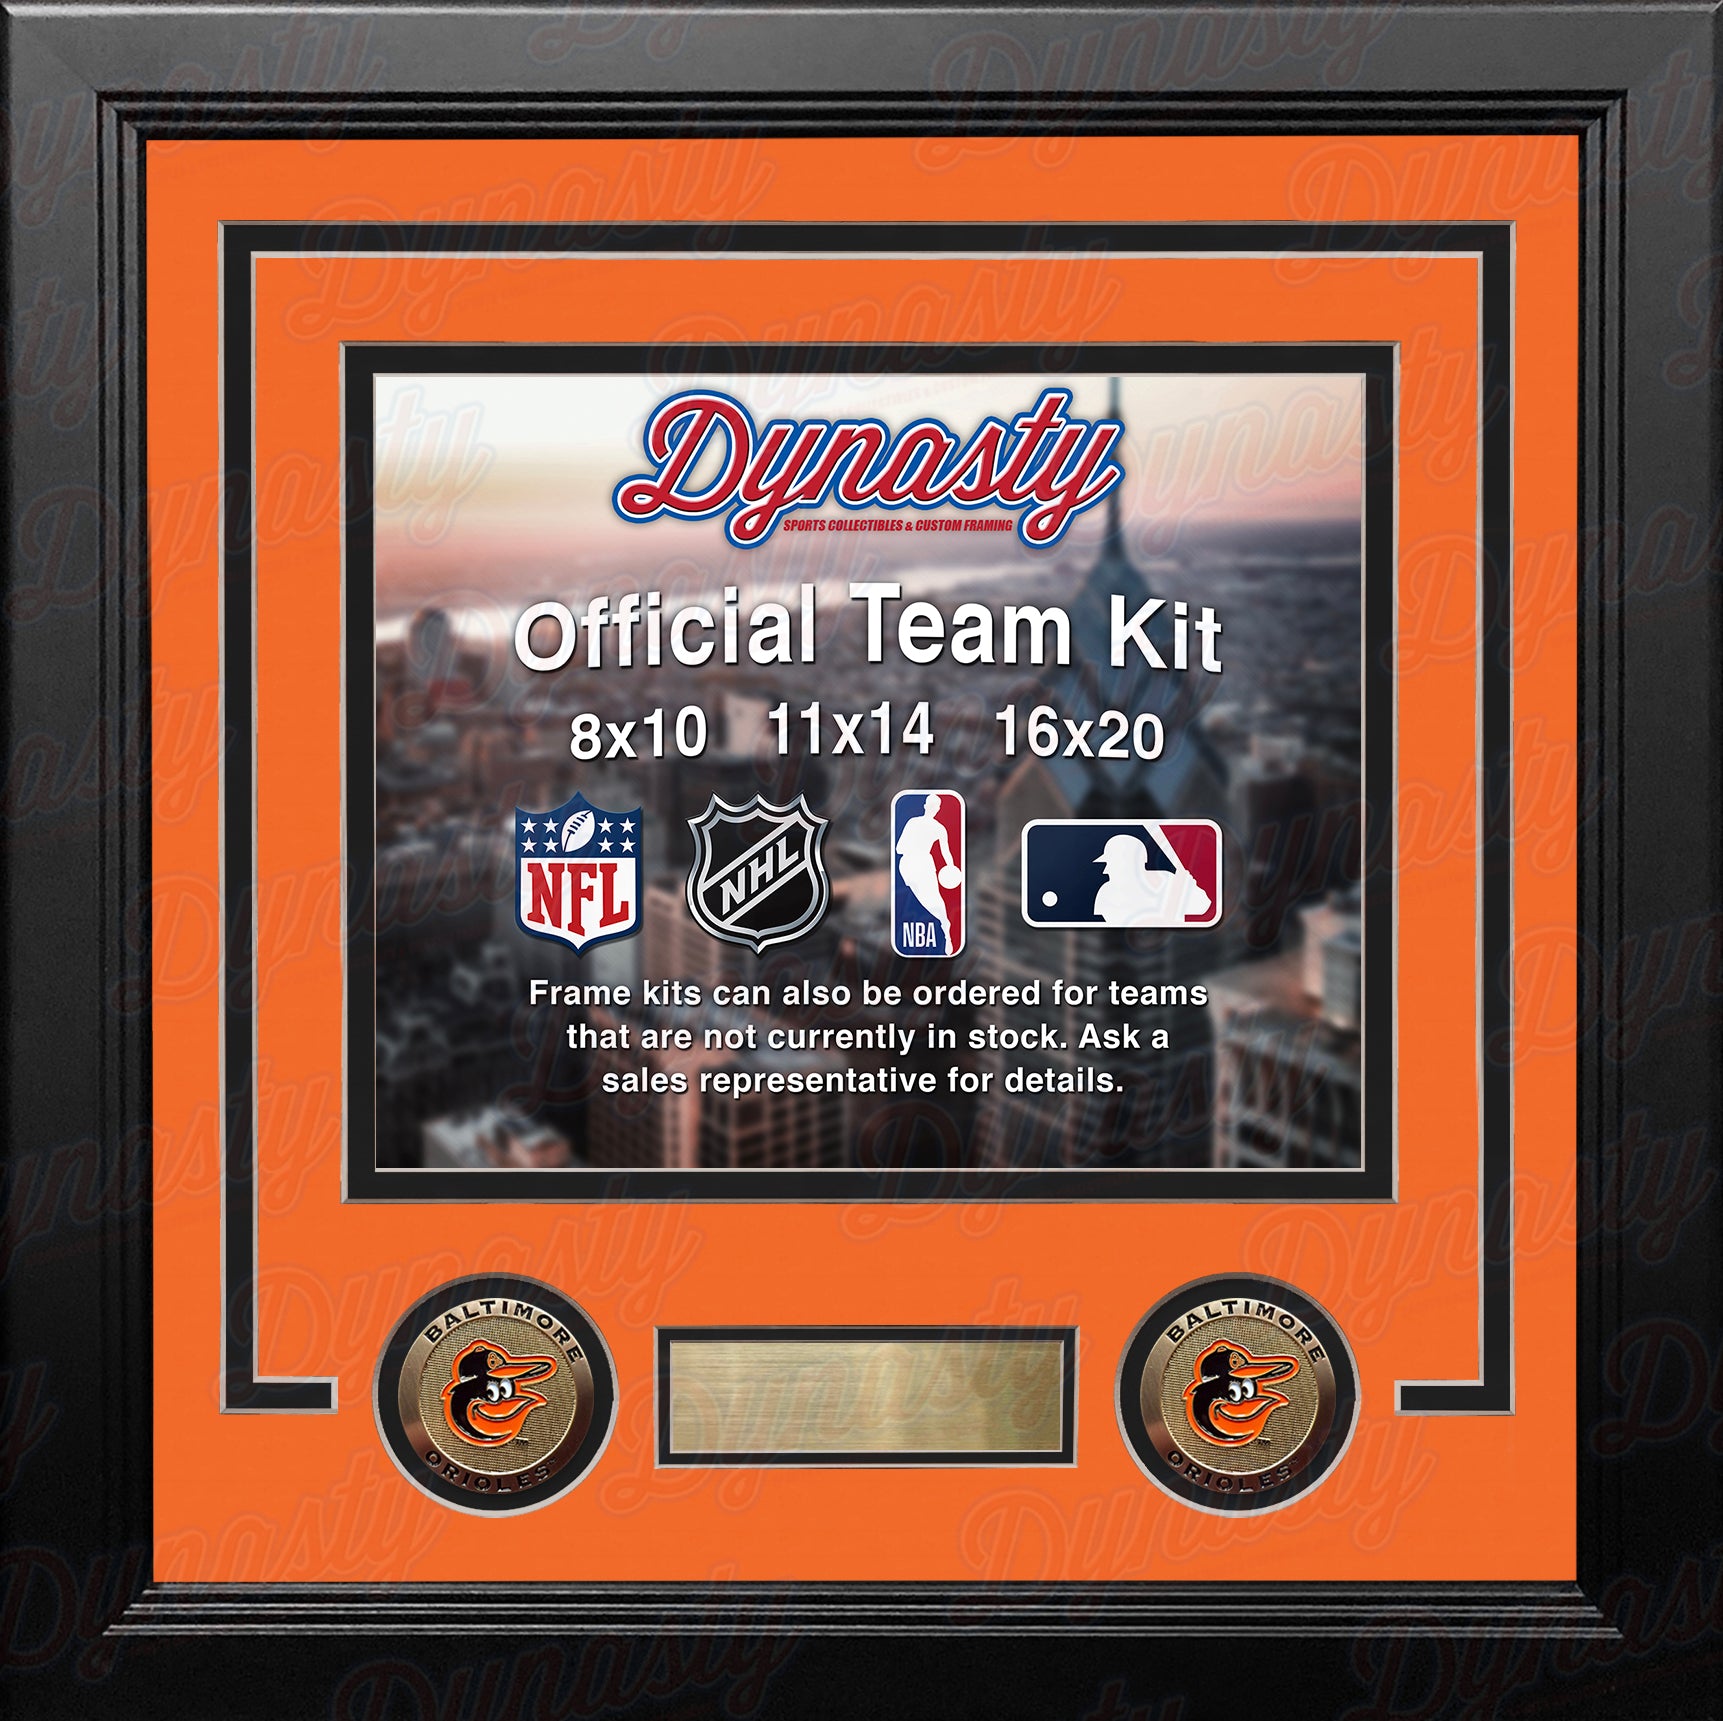 MLB Baseball Photo Picture Frame Kit - Baltimore Orioles (Orange Matting, Black Trim) - Dynasty Sports & Framing 